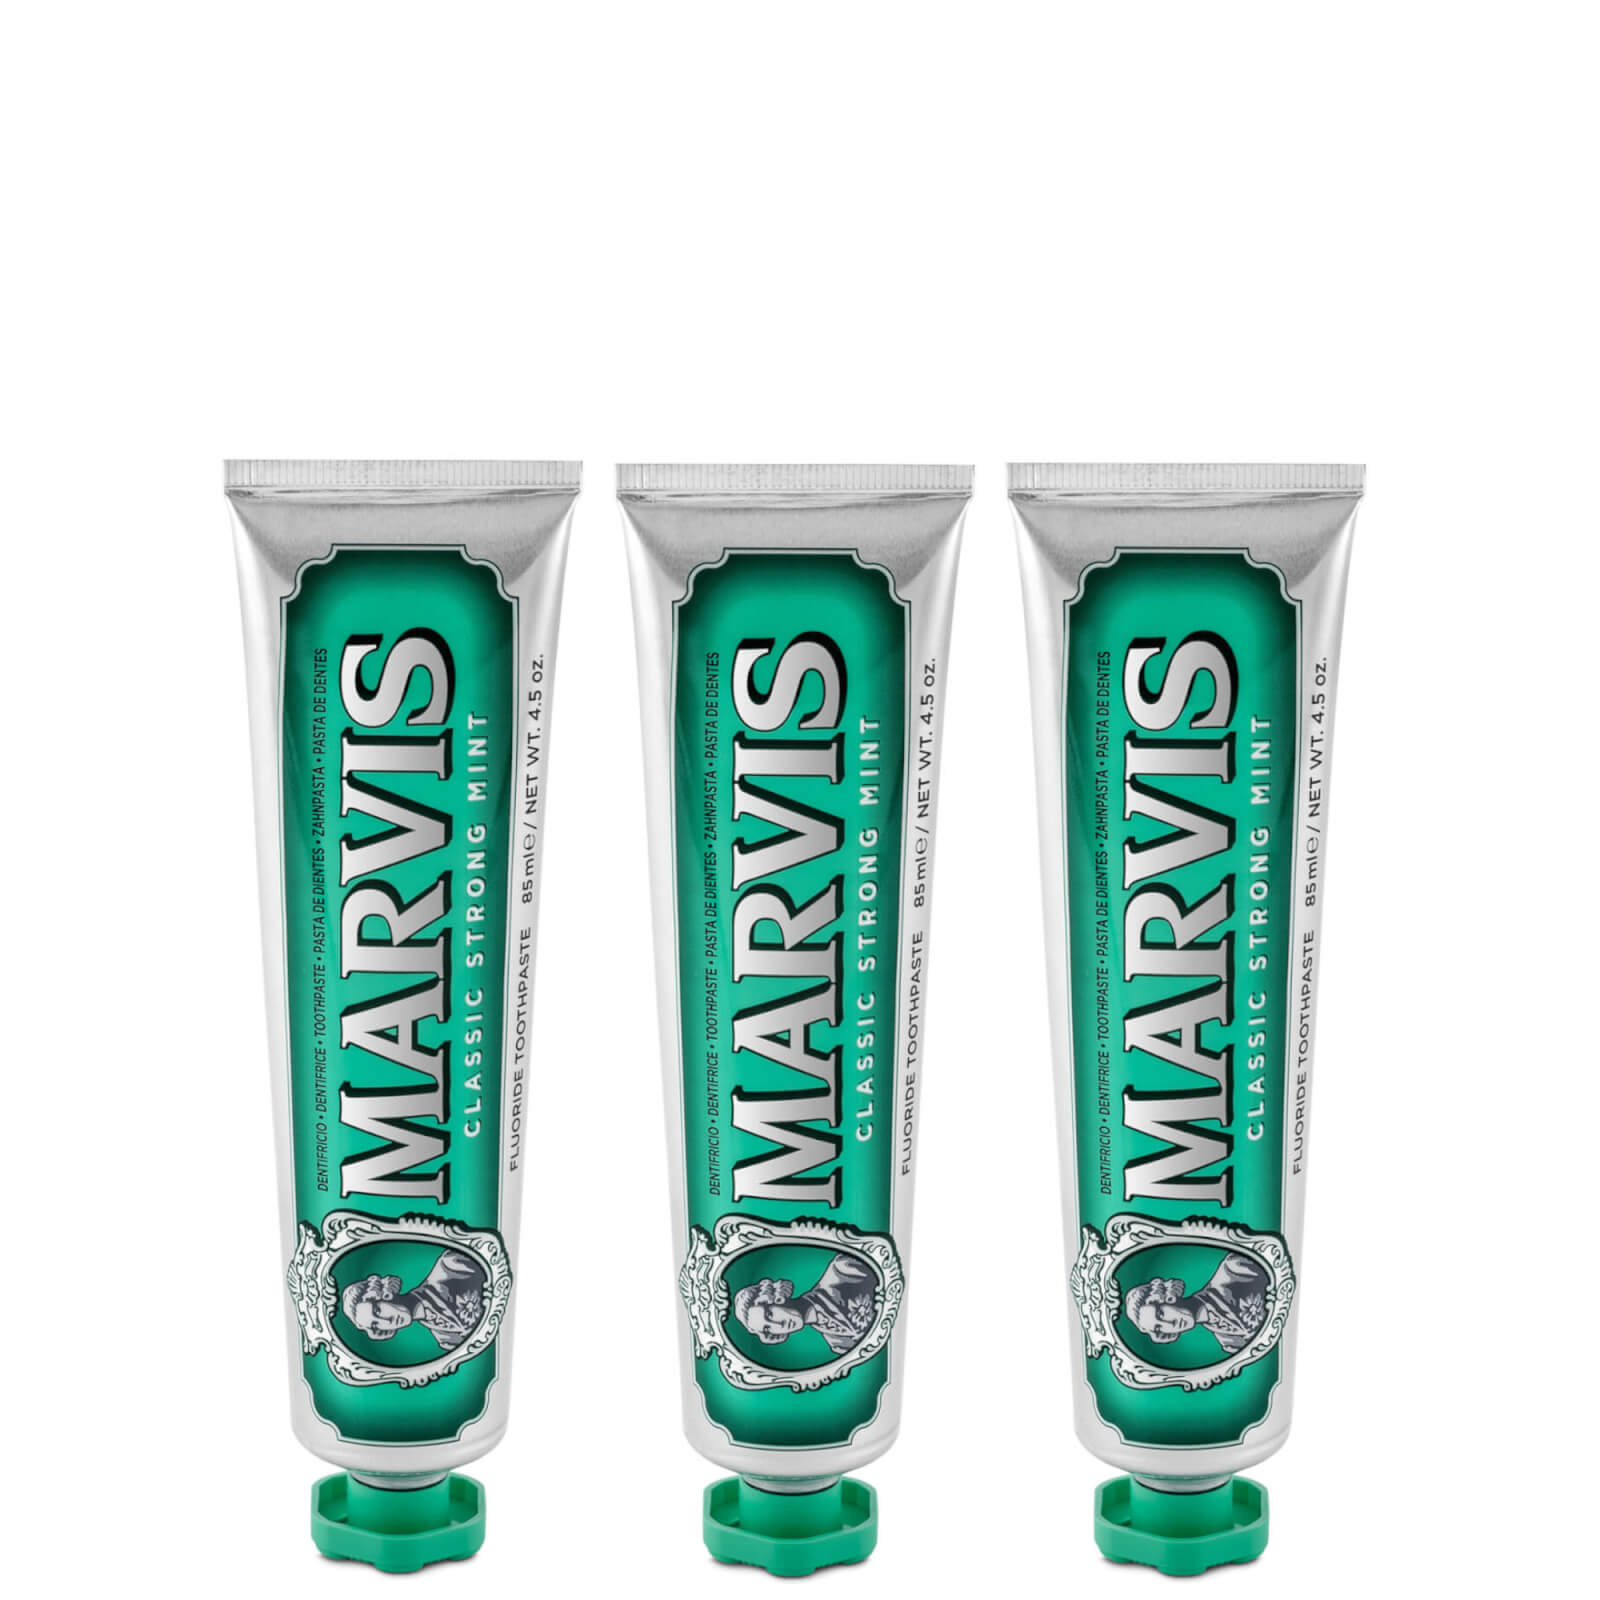 Pack de pasta de dientes Menta fuerte clásica de Marvis (3 x 85 ml)